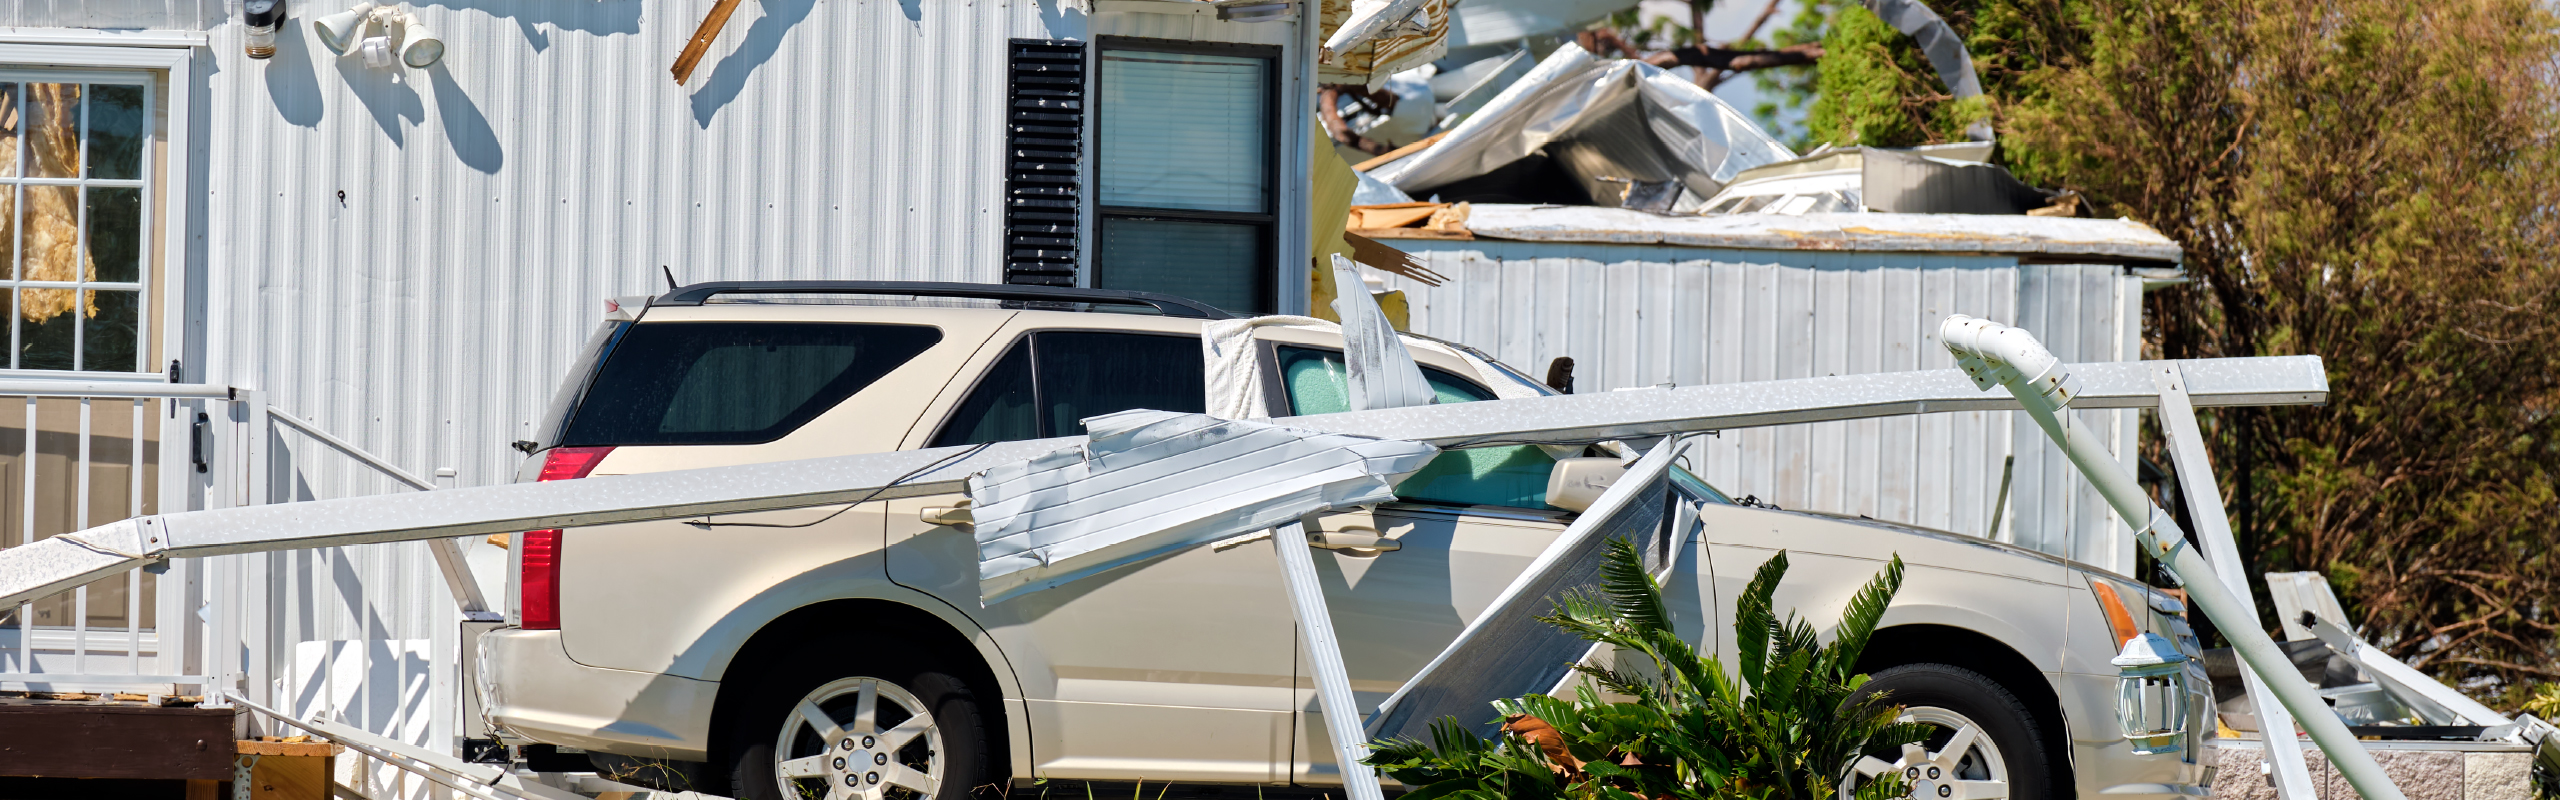 Public Adjusters Associates - Residential Hurricane Damage Image 2